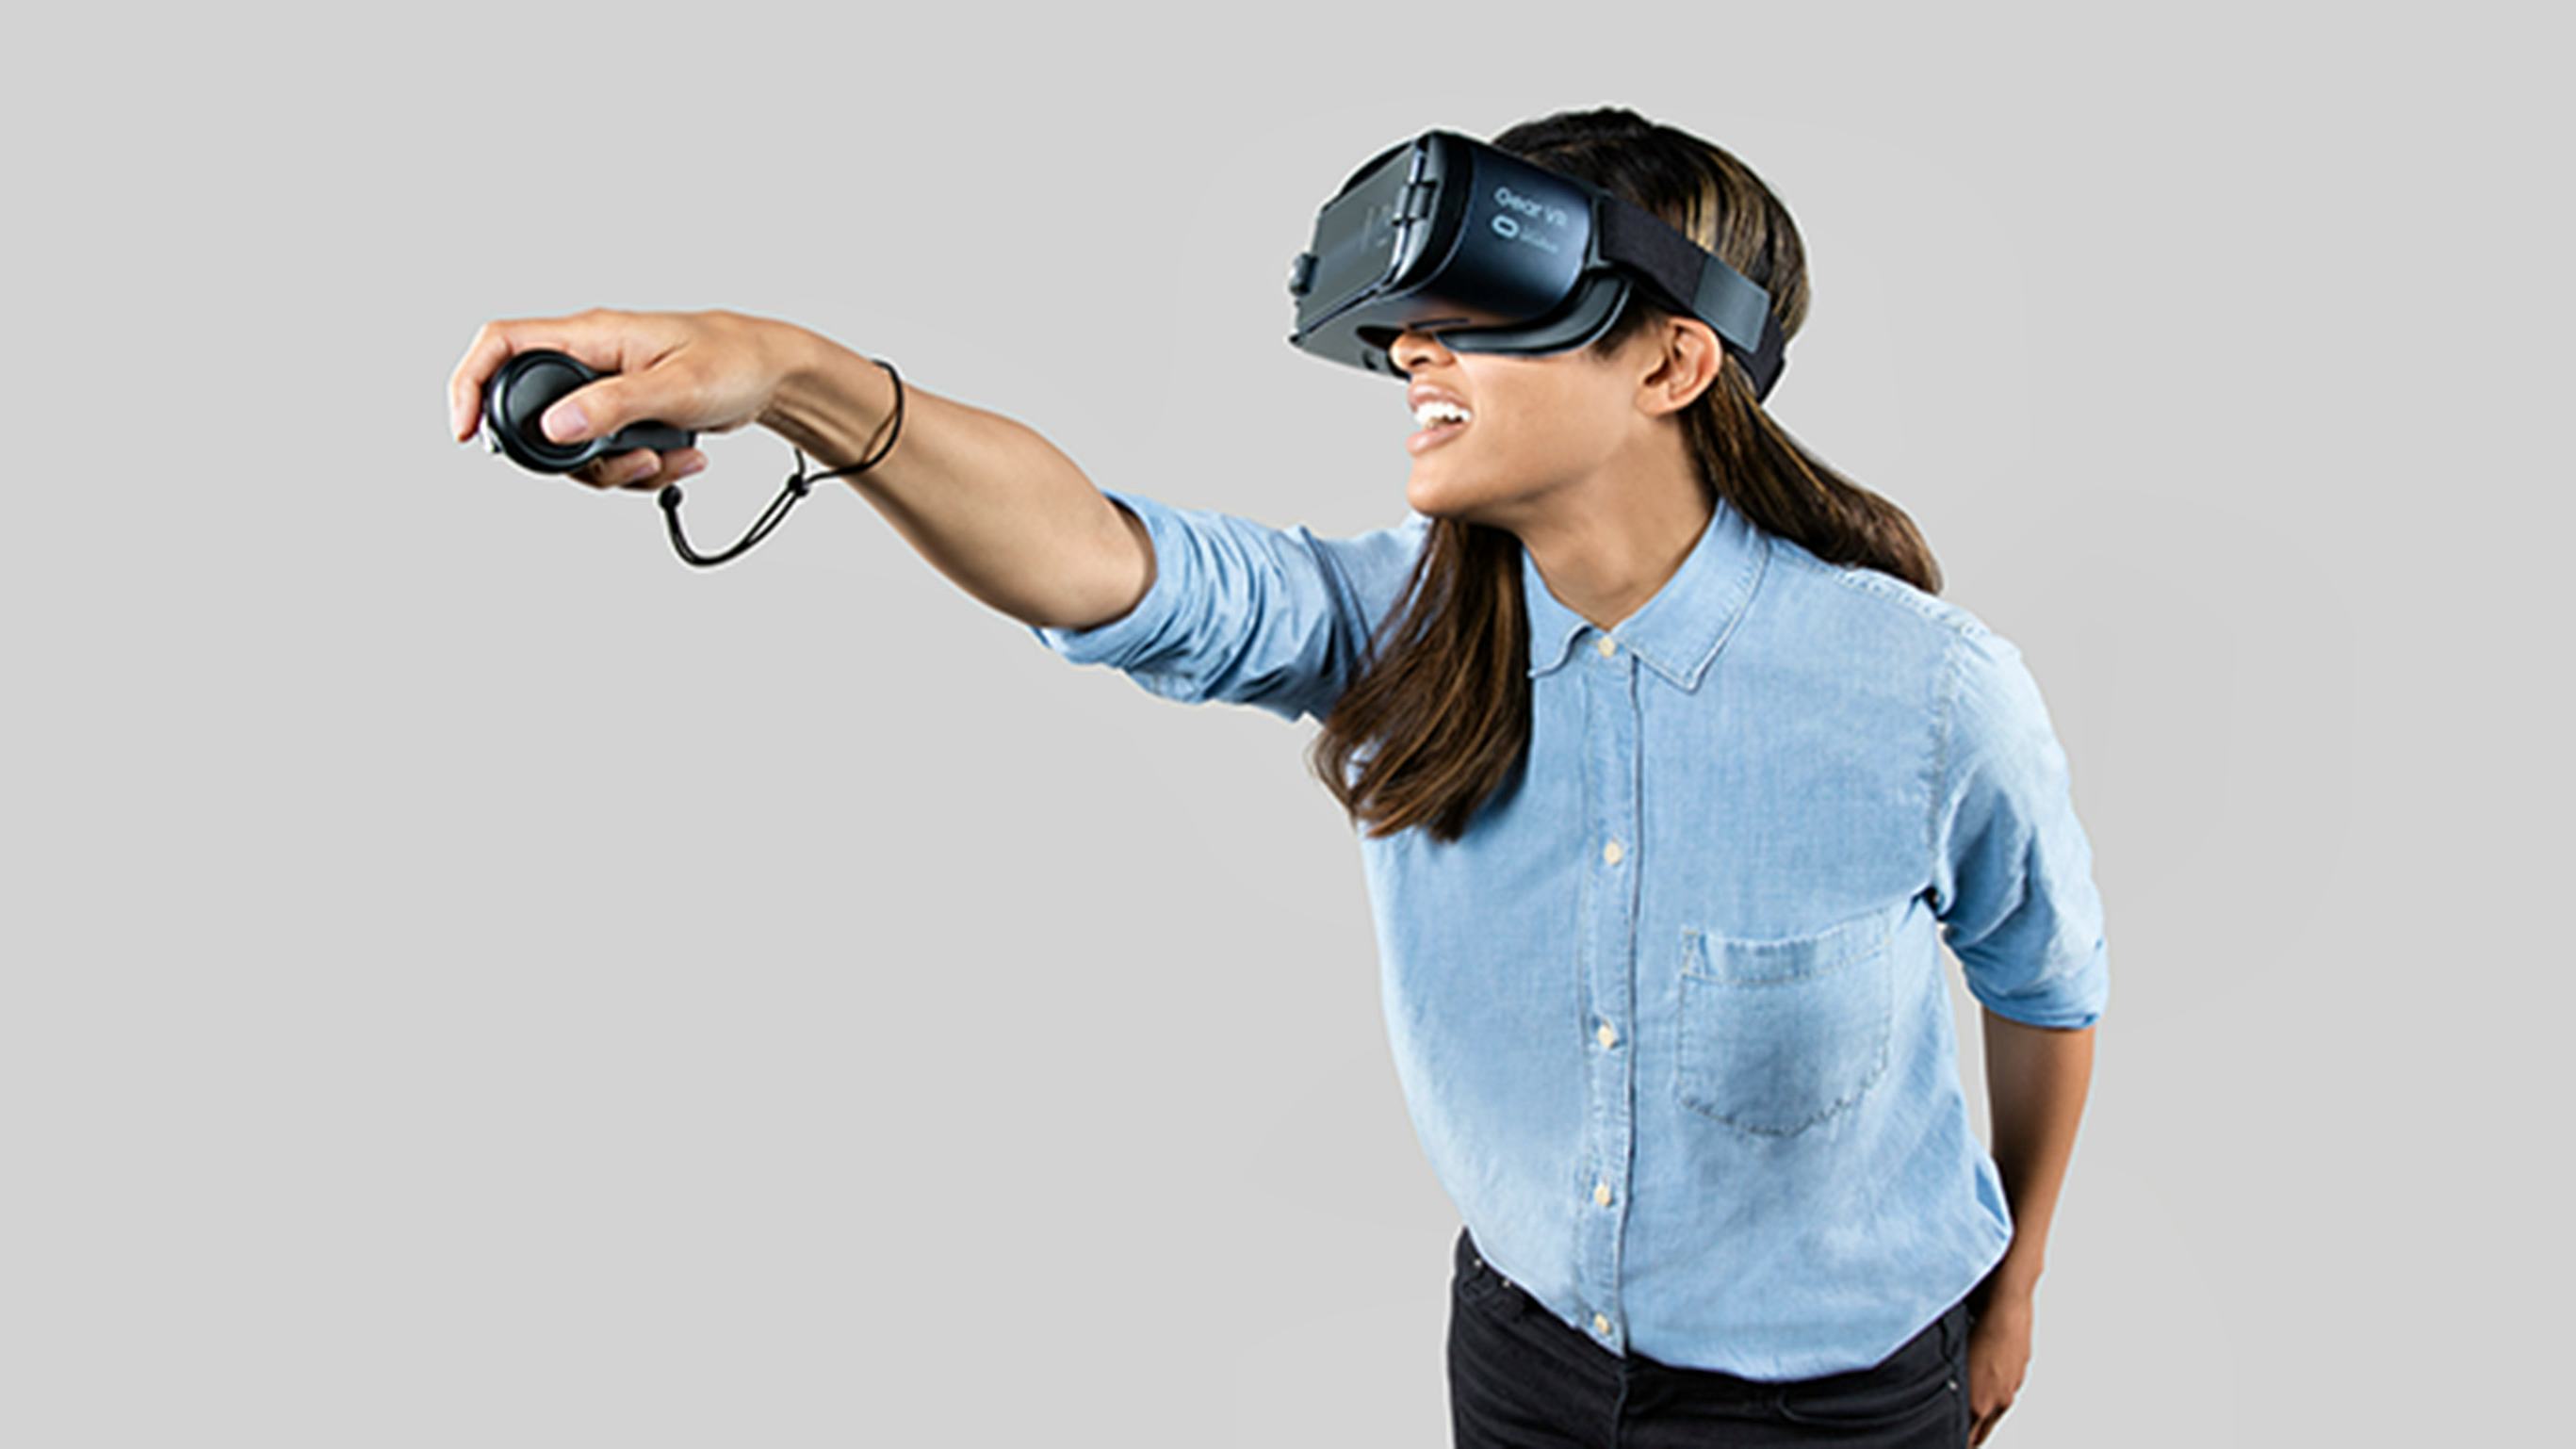 vejviser Om Spektakulær Newsela - Coming soon: More virtual reality games to play than ever before